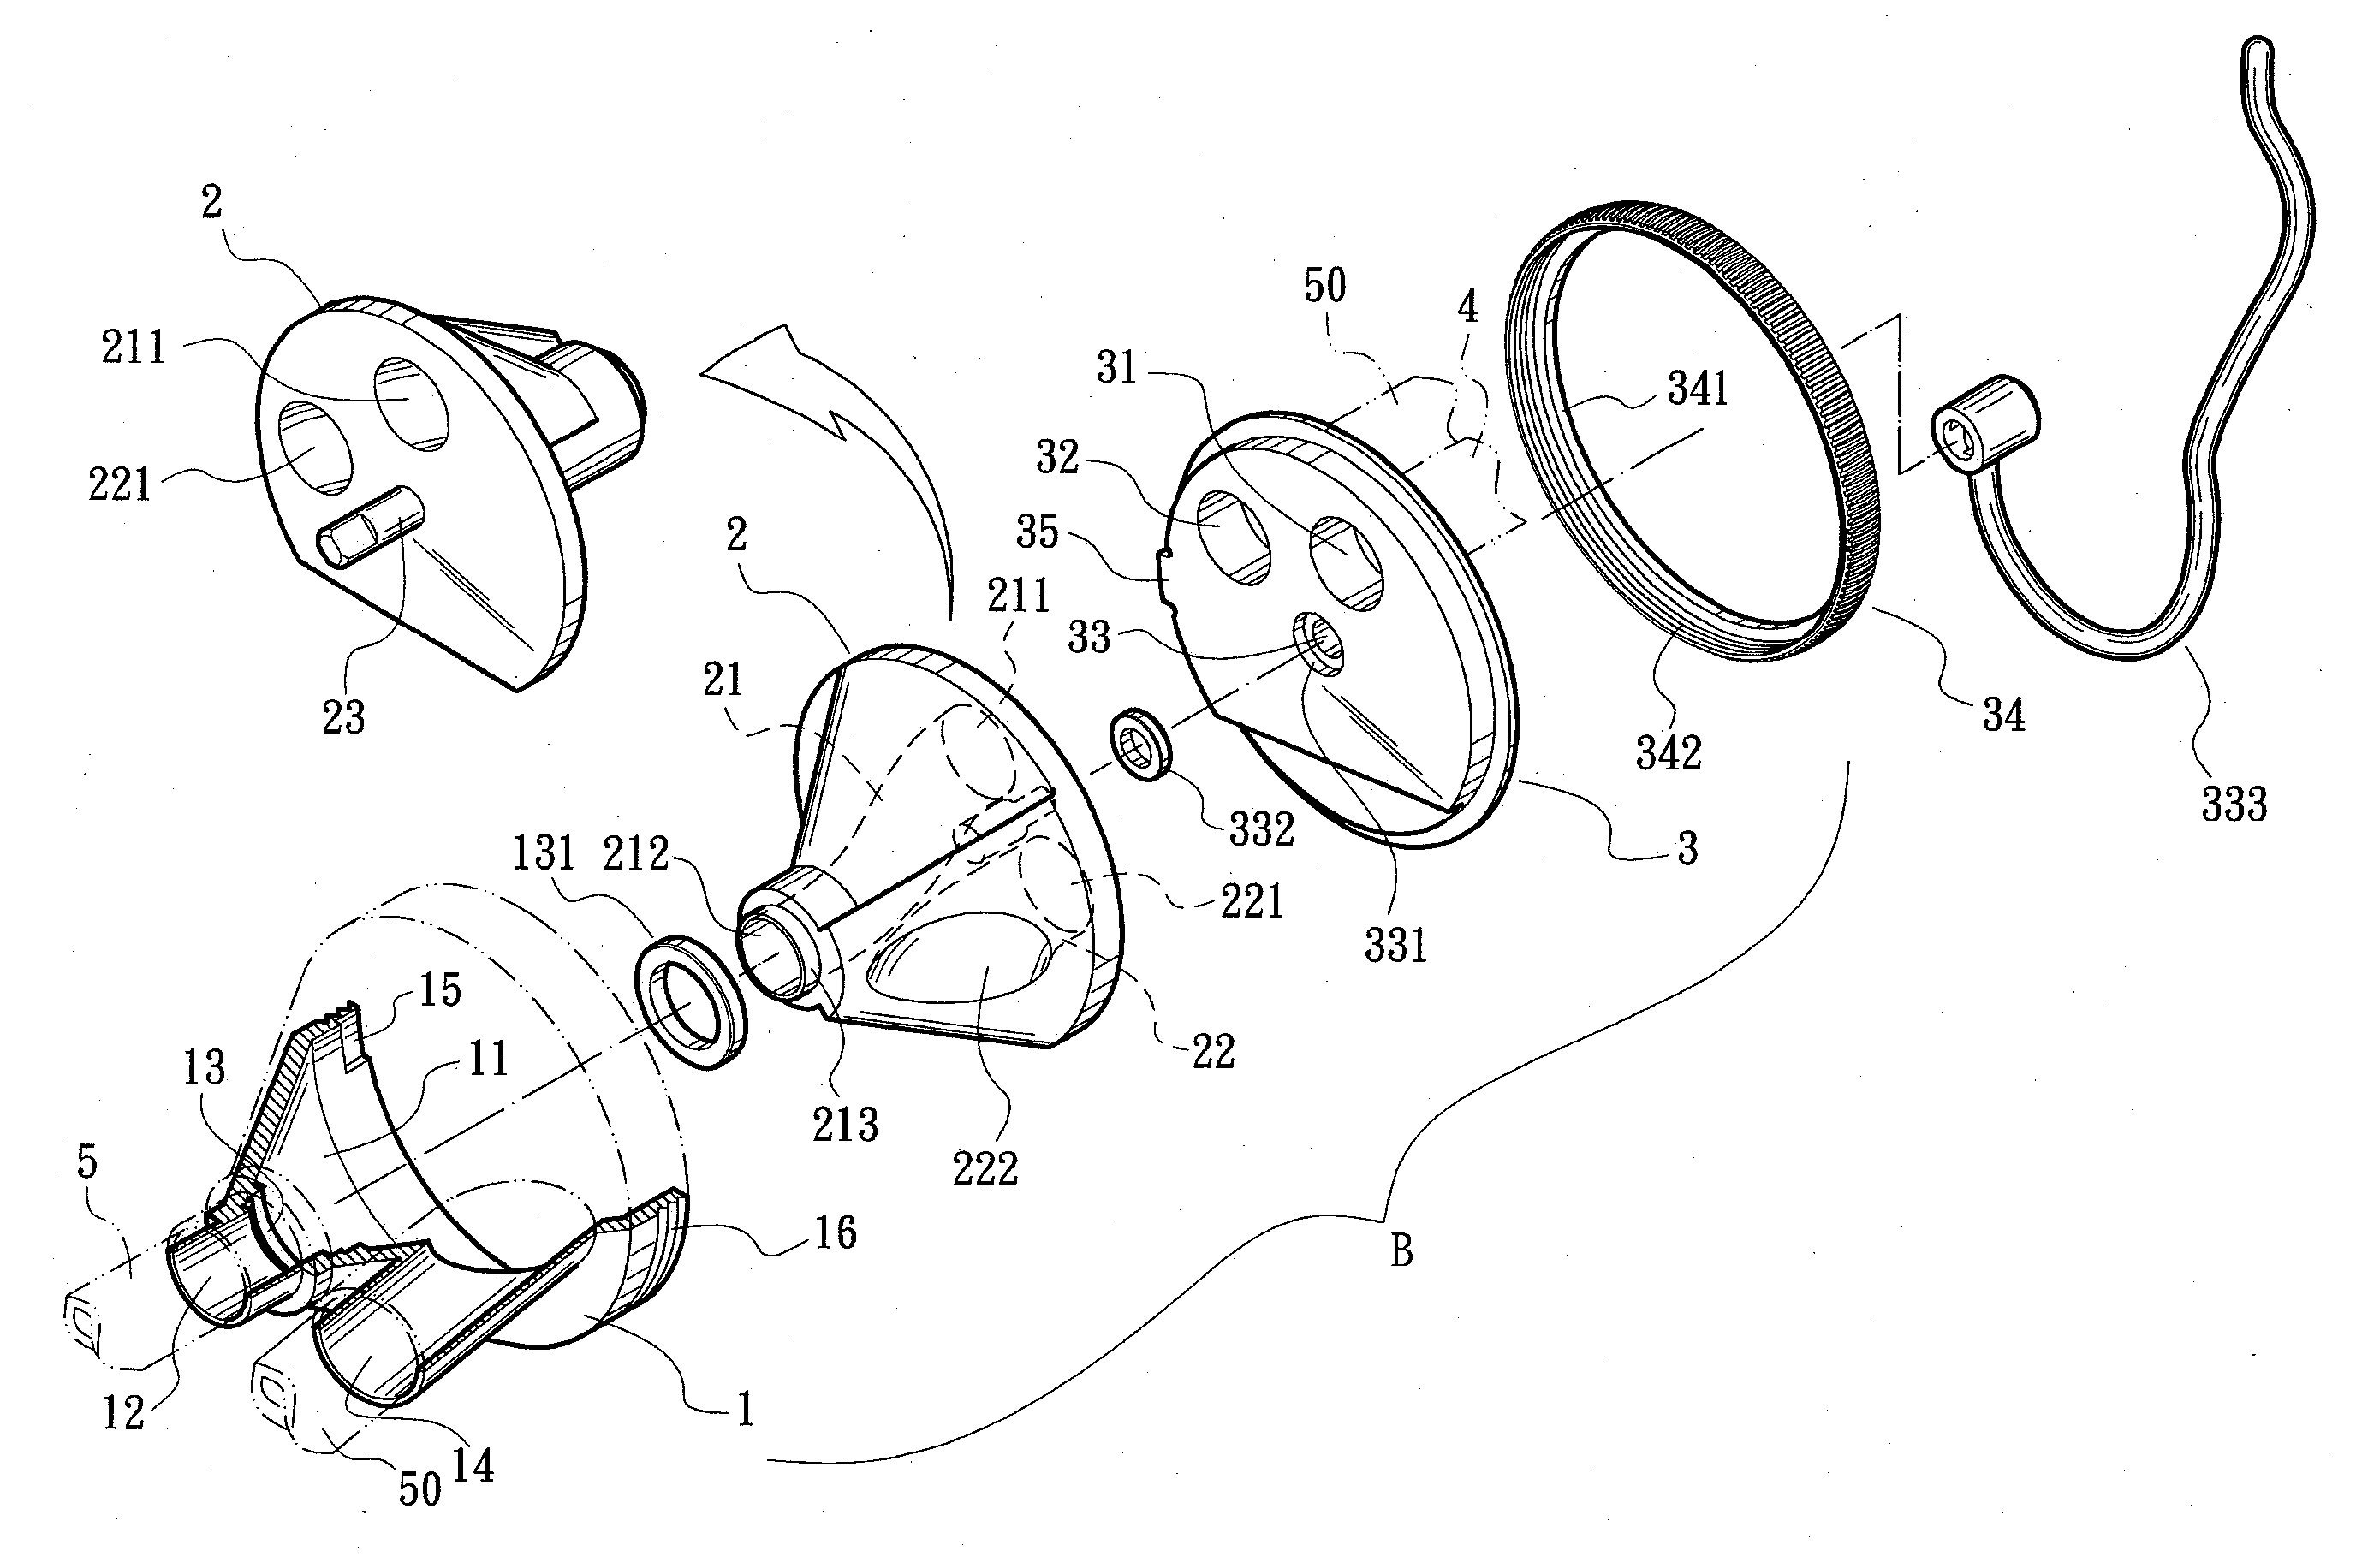 Straight-through rotary valve structure